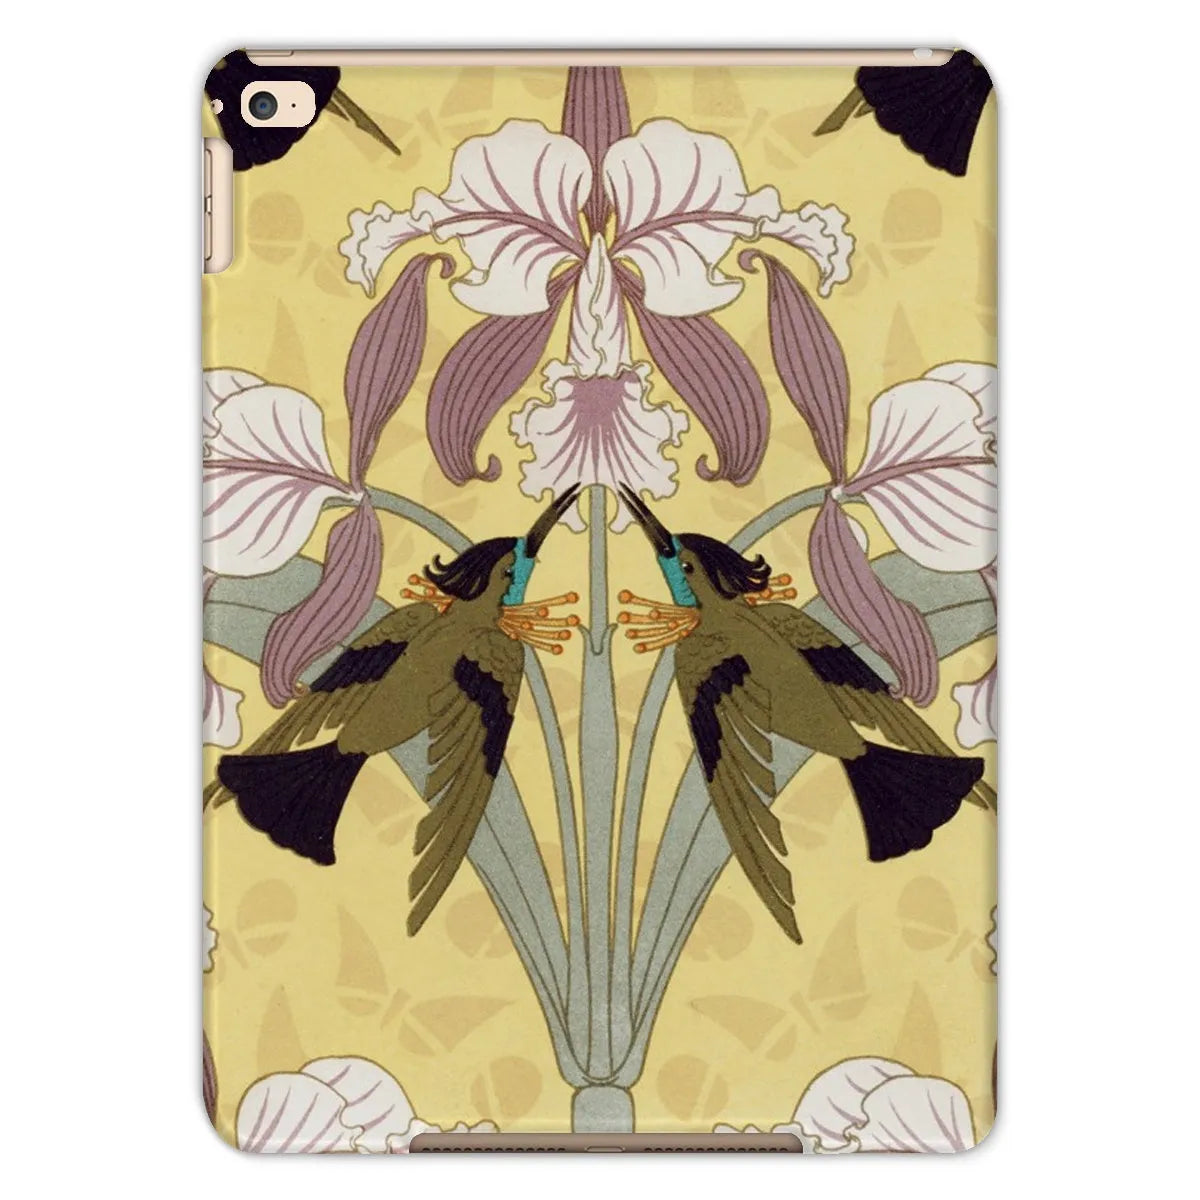 Oiseaux - mouches Et Orchidées By Maurice Pillard Verneuil Aesthetic Ipad Case - Slim Designer Back Cover - Ipad Air